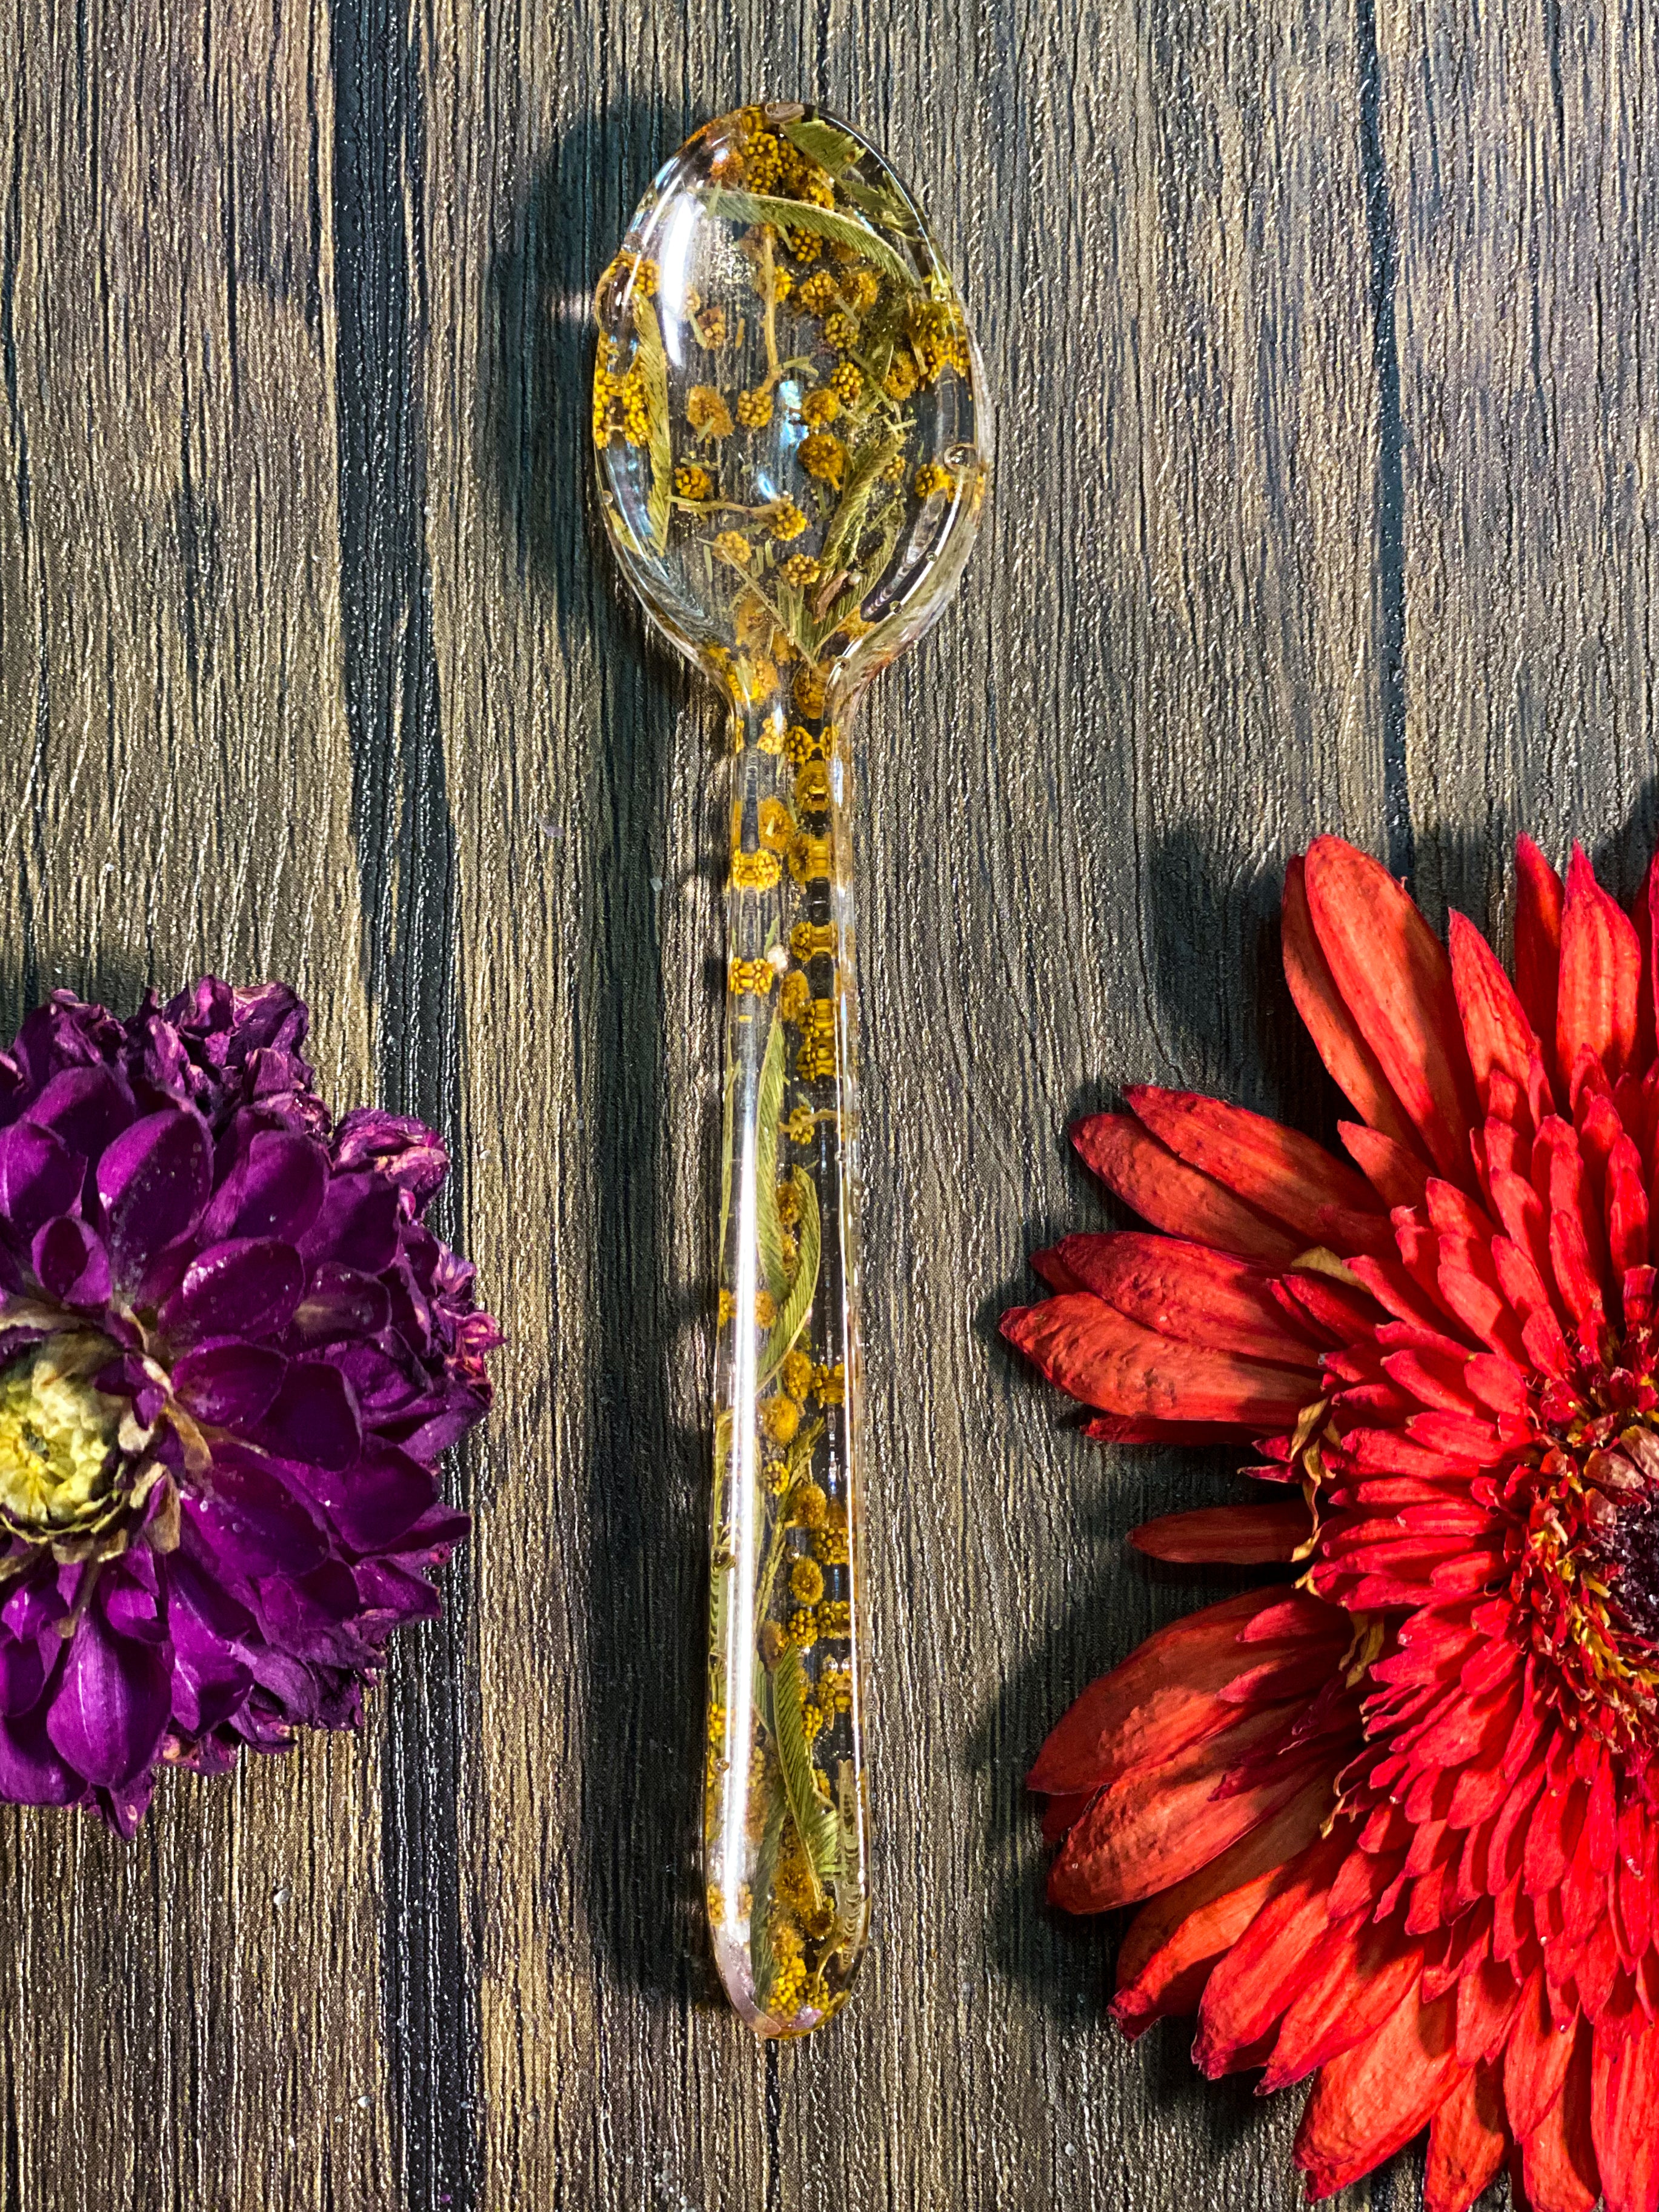 Floral Spoon